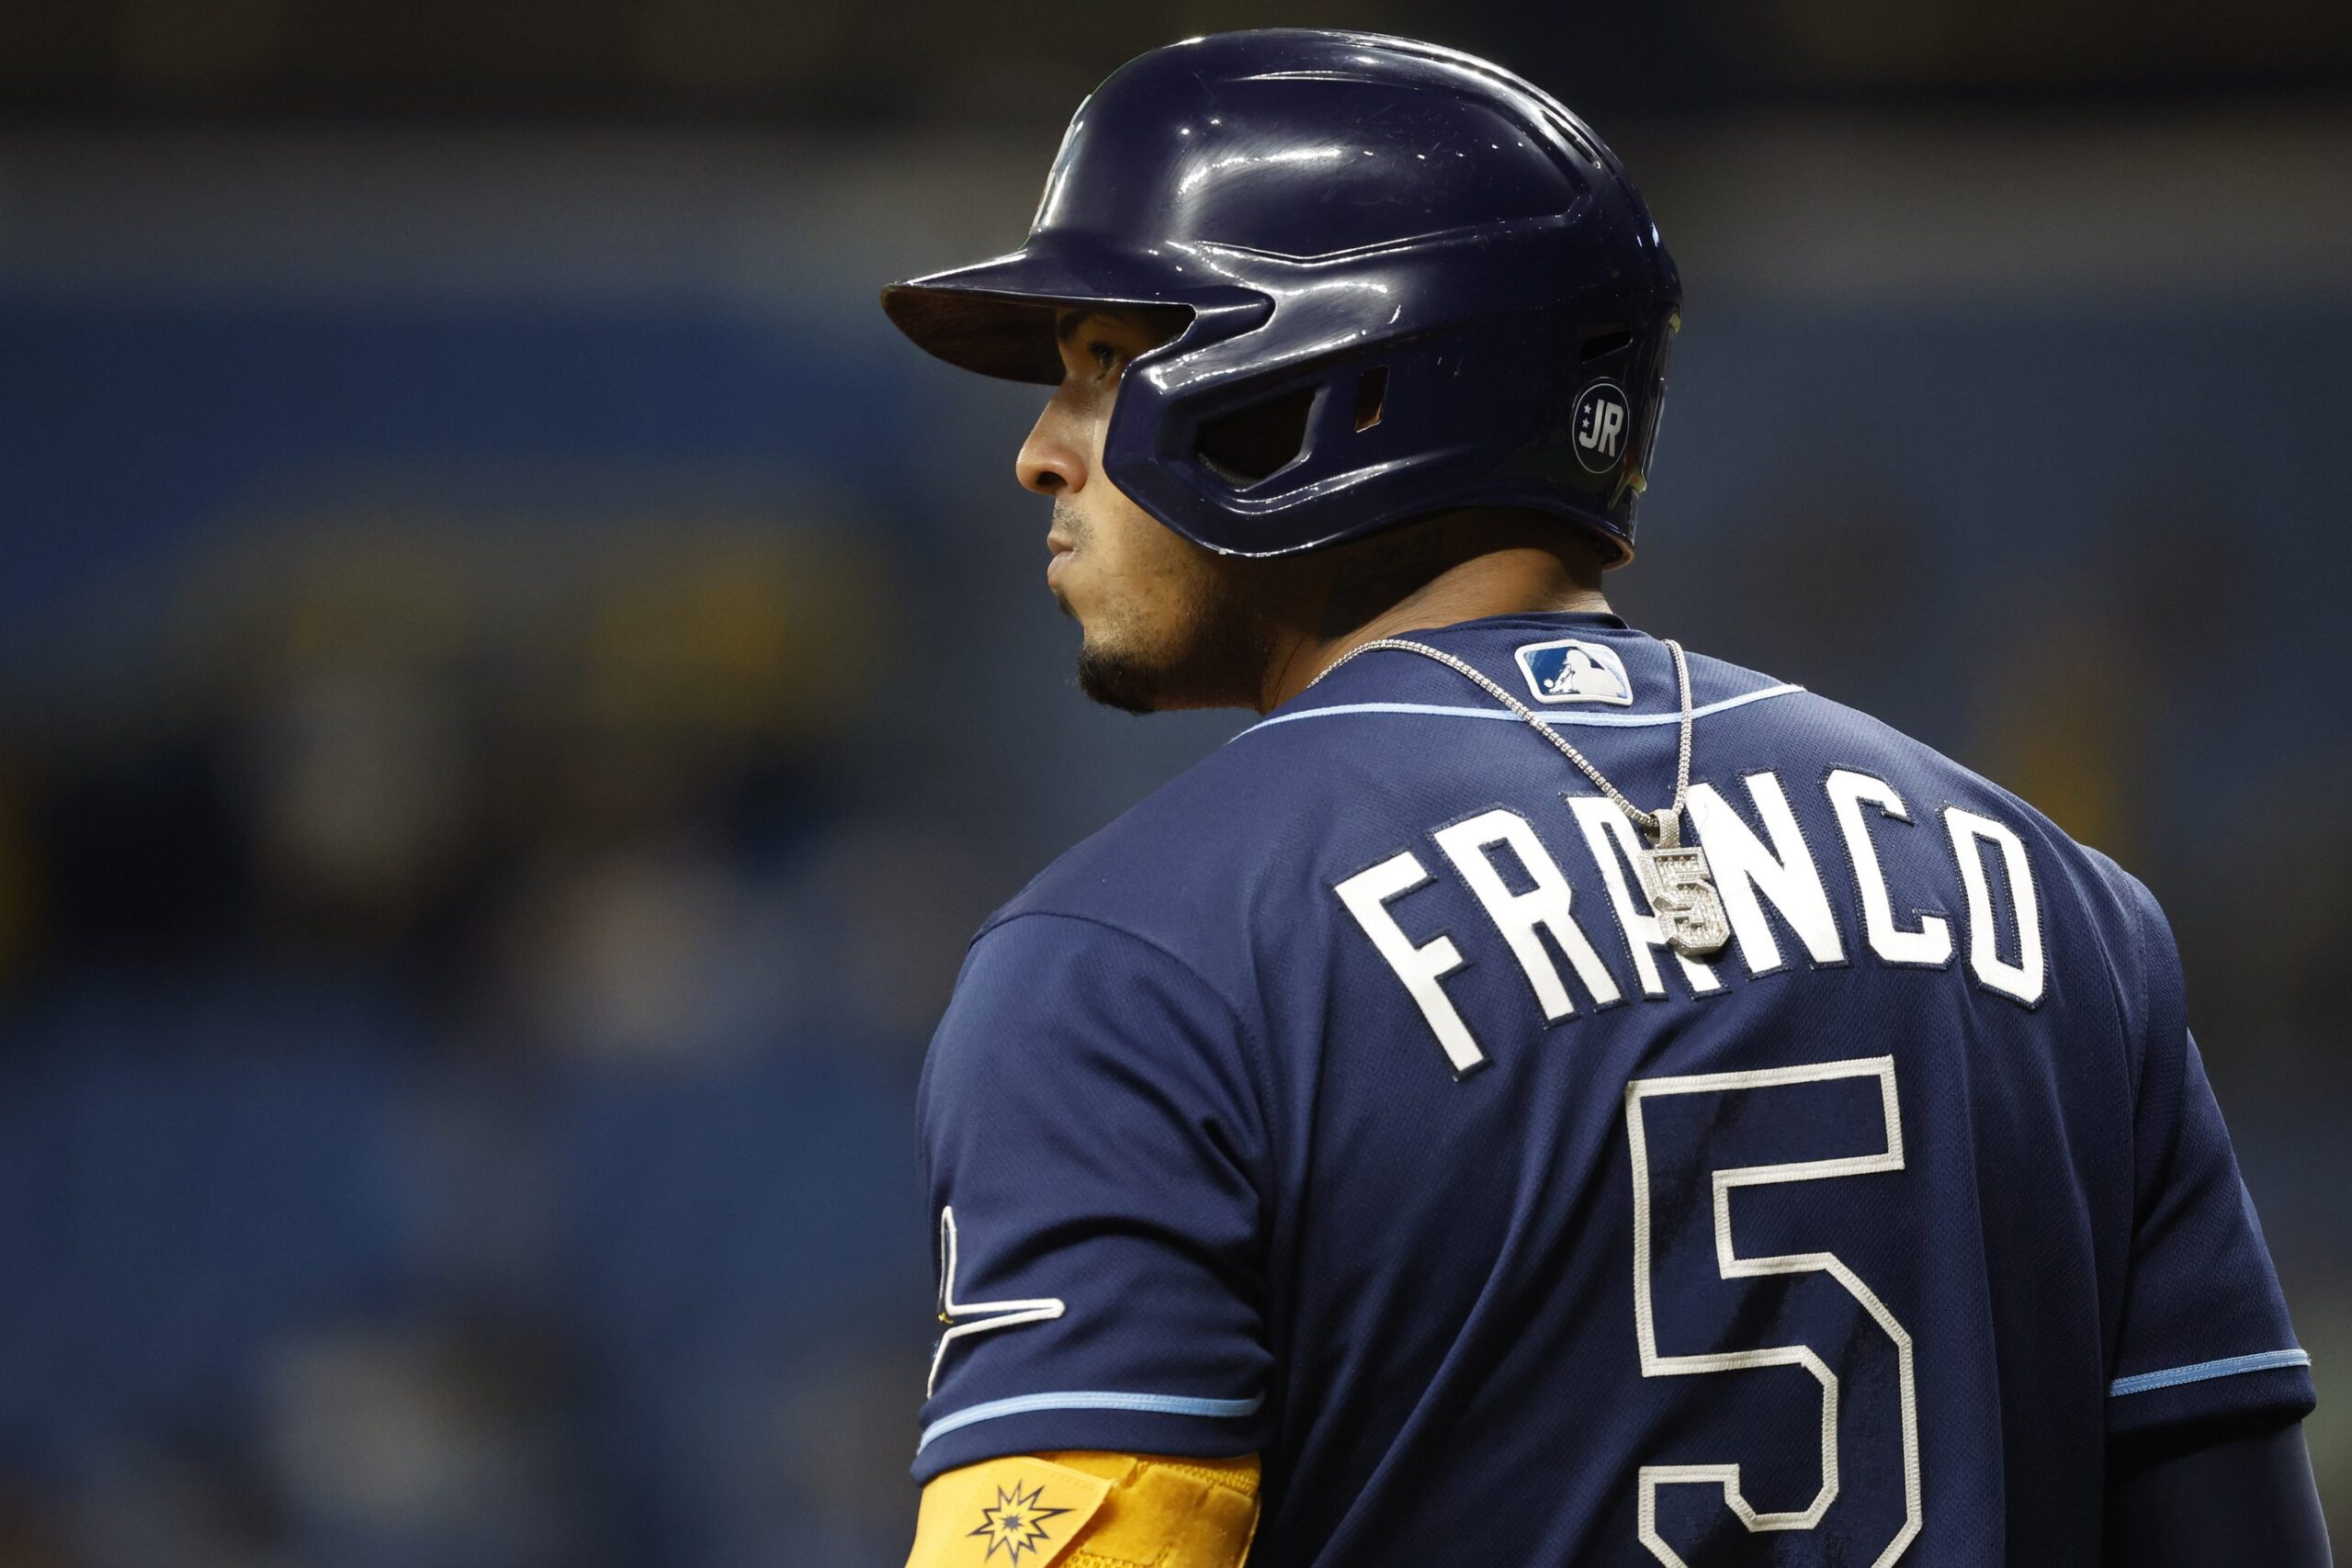 Tampa Bay Rays shortstop Wander Franco